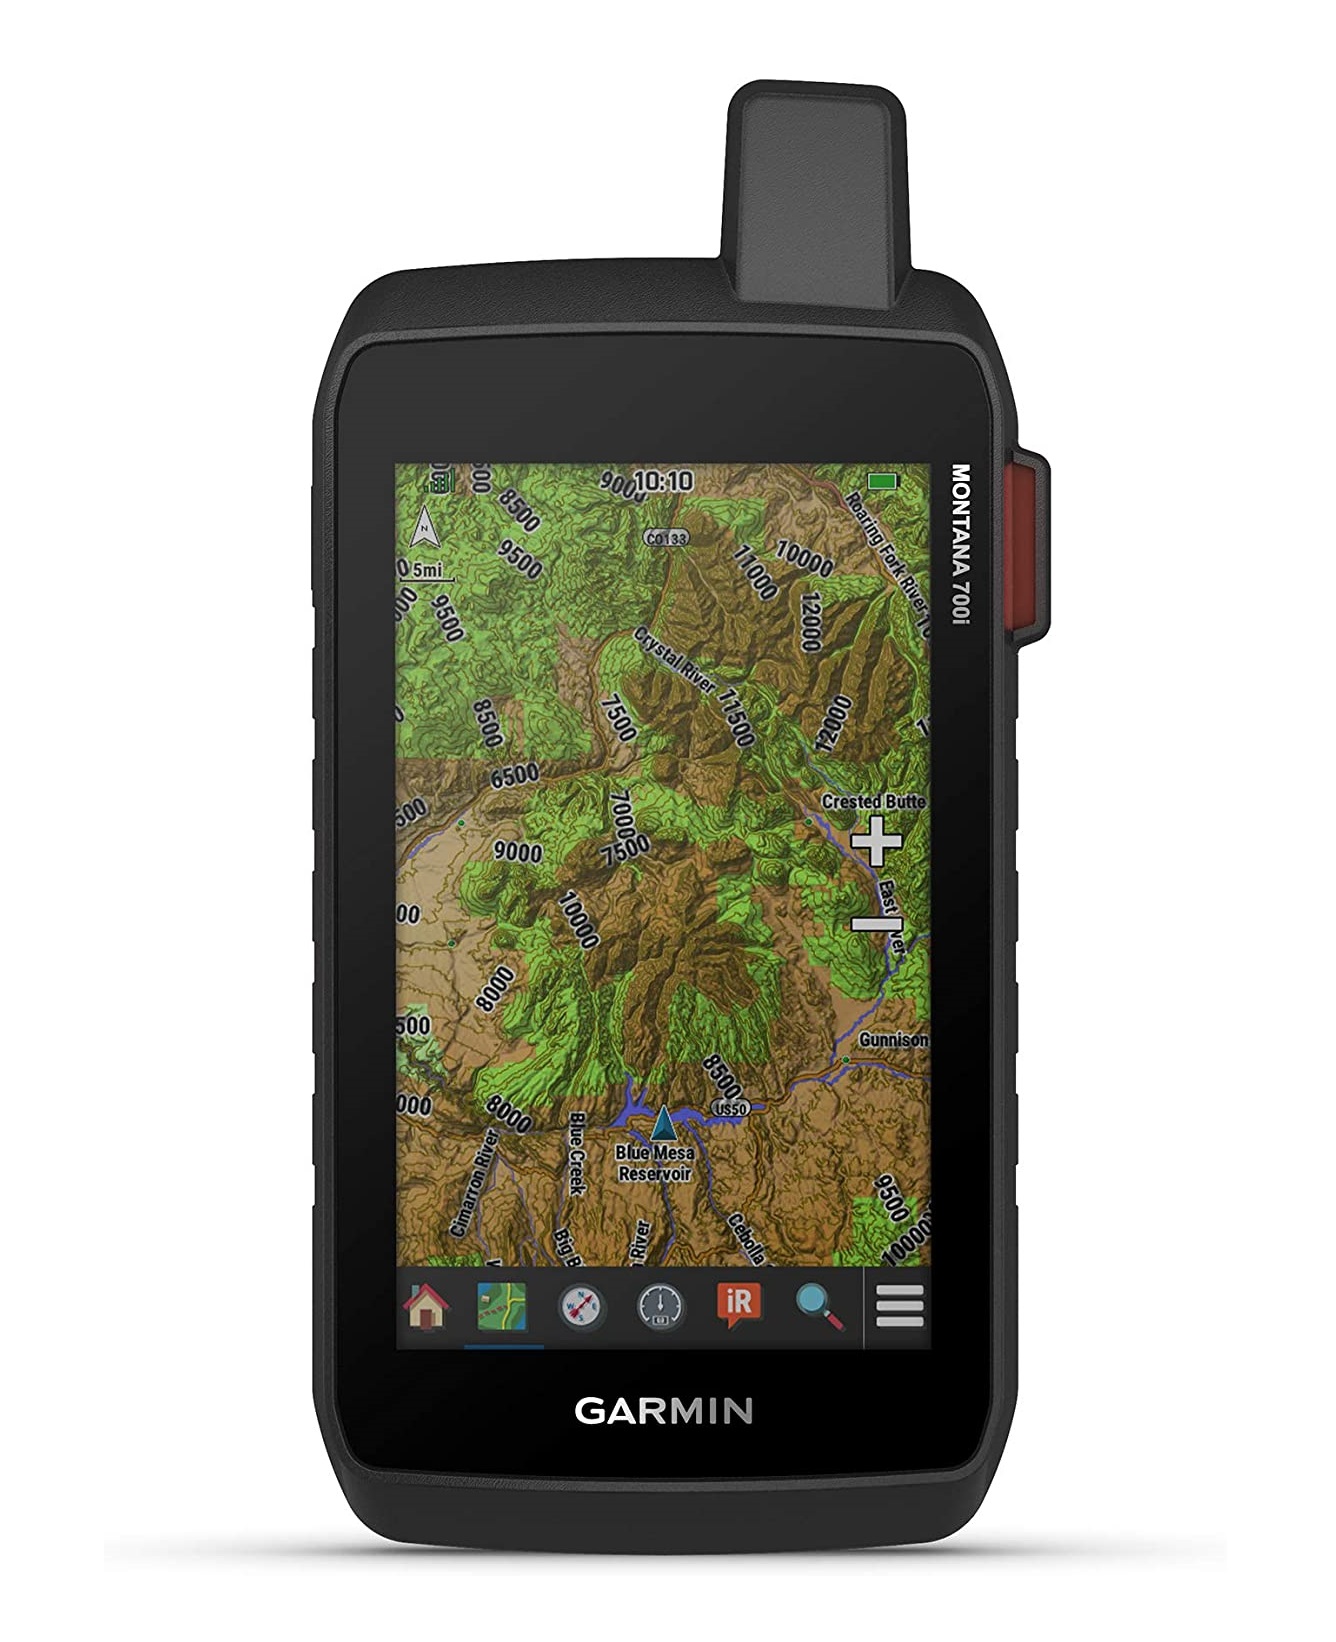 Garmin Alpha 100 GPS Collar Review - Project Upland Magazine